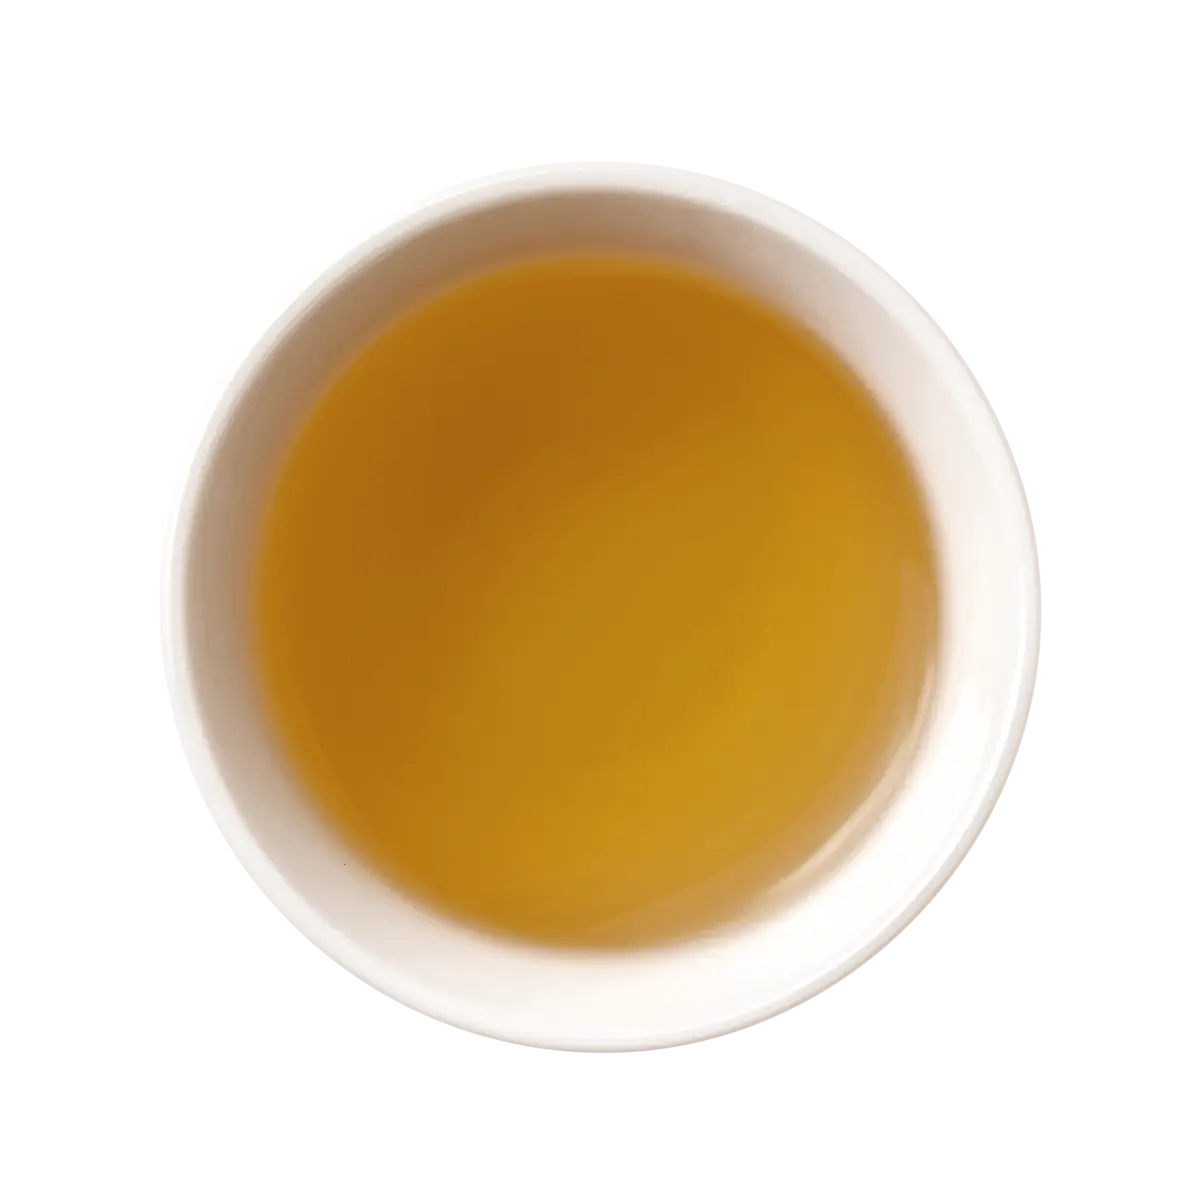 【 HOT BREW 】No.5紅玉紅茶(ルビー紅茶)10包入り